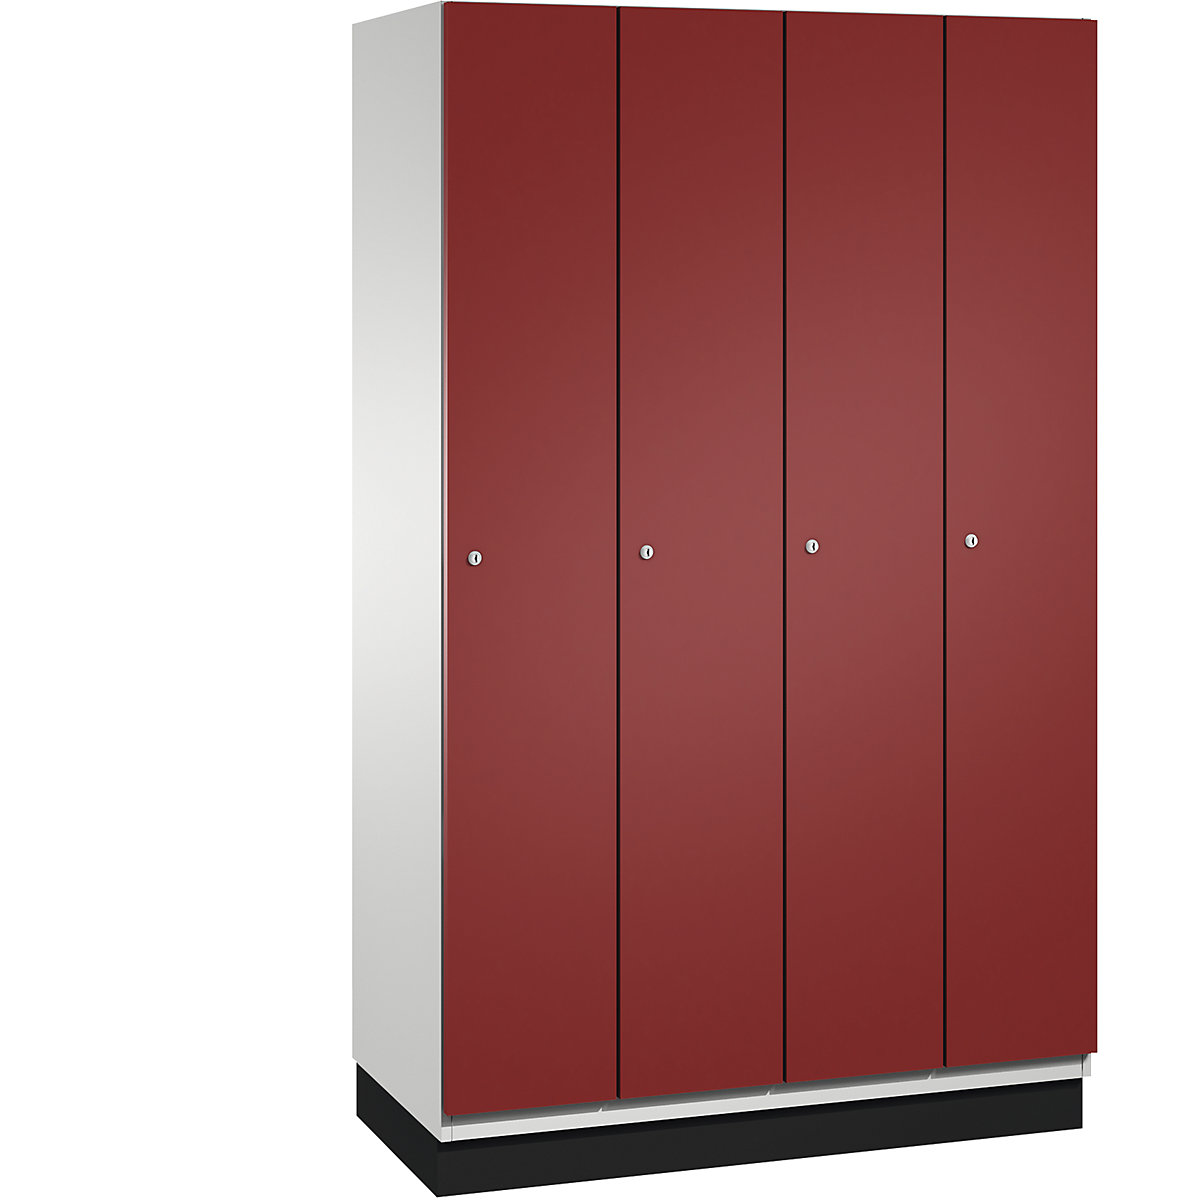 CAMBIO cloakroom locker with sheet steel doors – C+P, 4 compartments, 1200 mm wide, body light grey / door ruby red-6